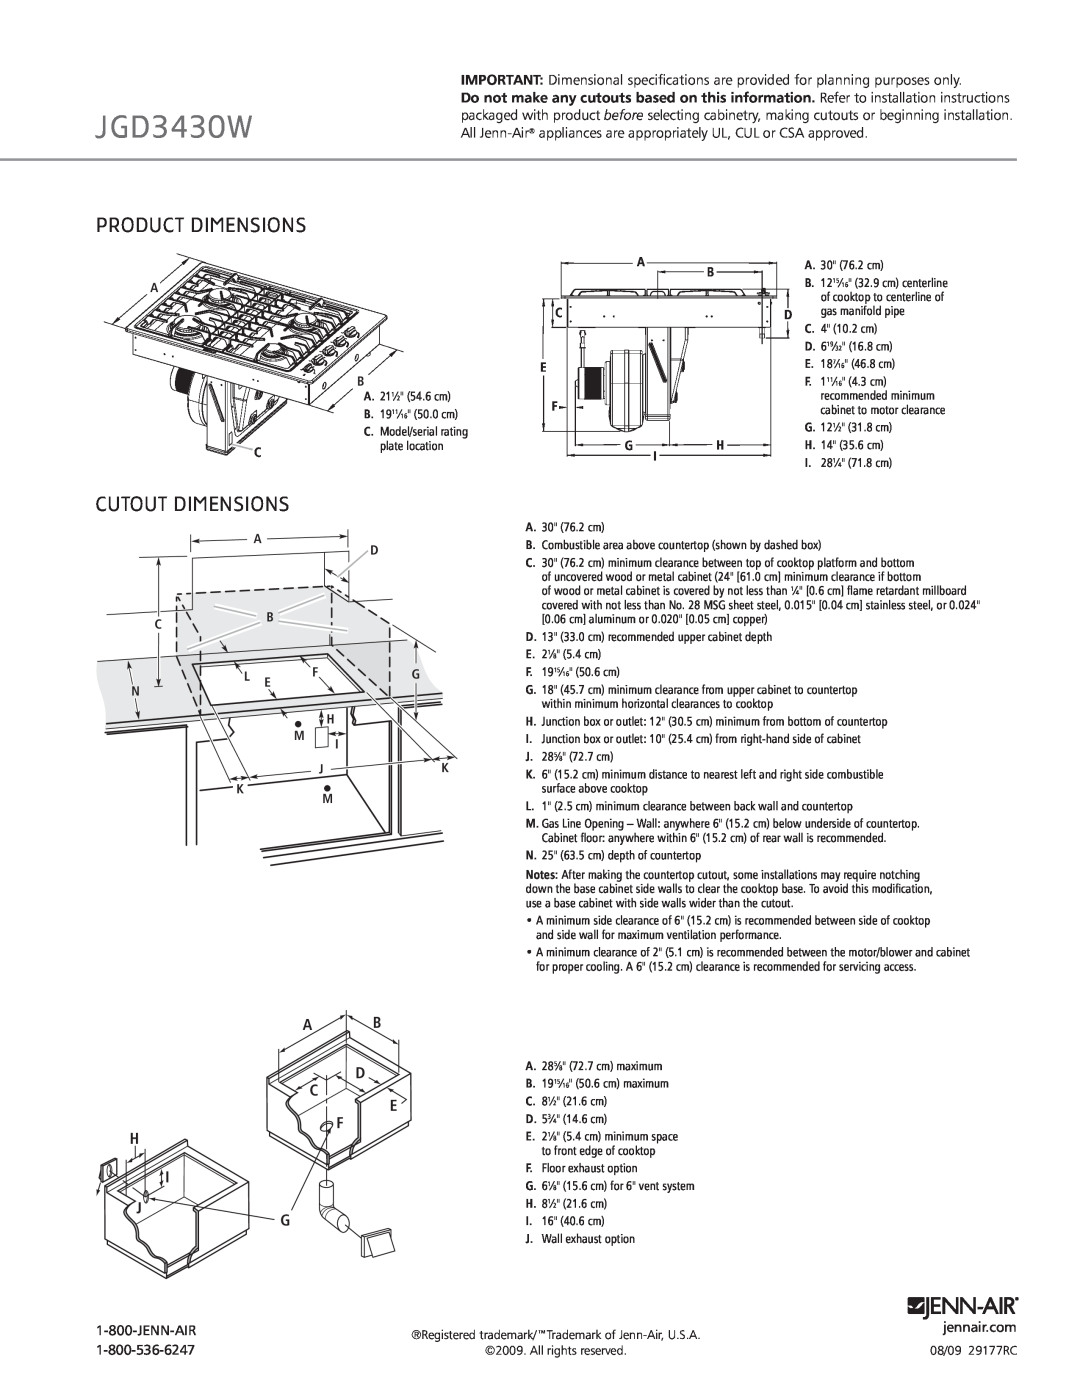 Jenn-Air JGD3430W specifications Product Dimensions, Cutout Dimensions, A B D C E F H J G 